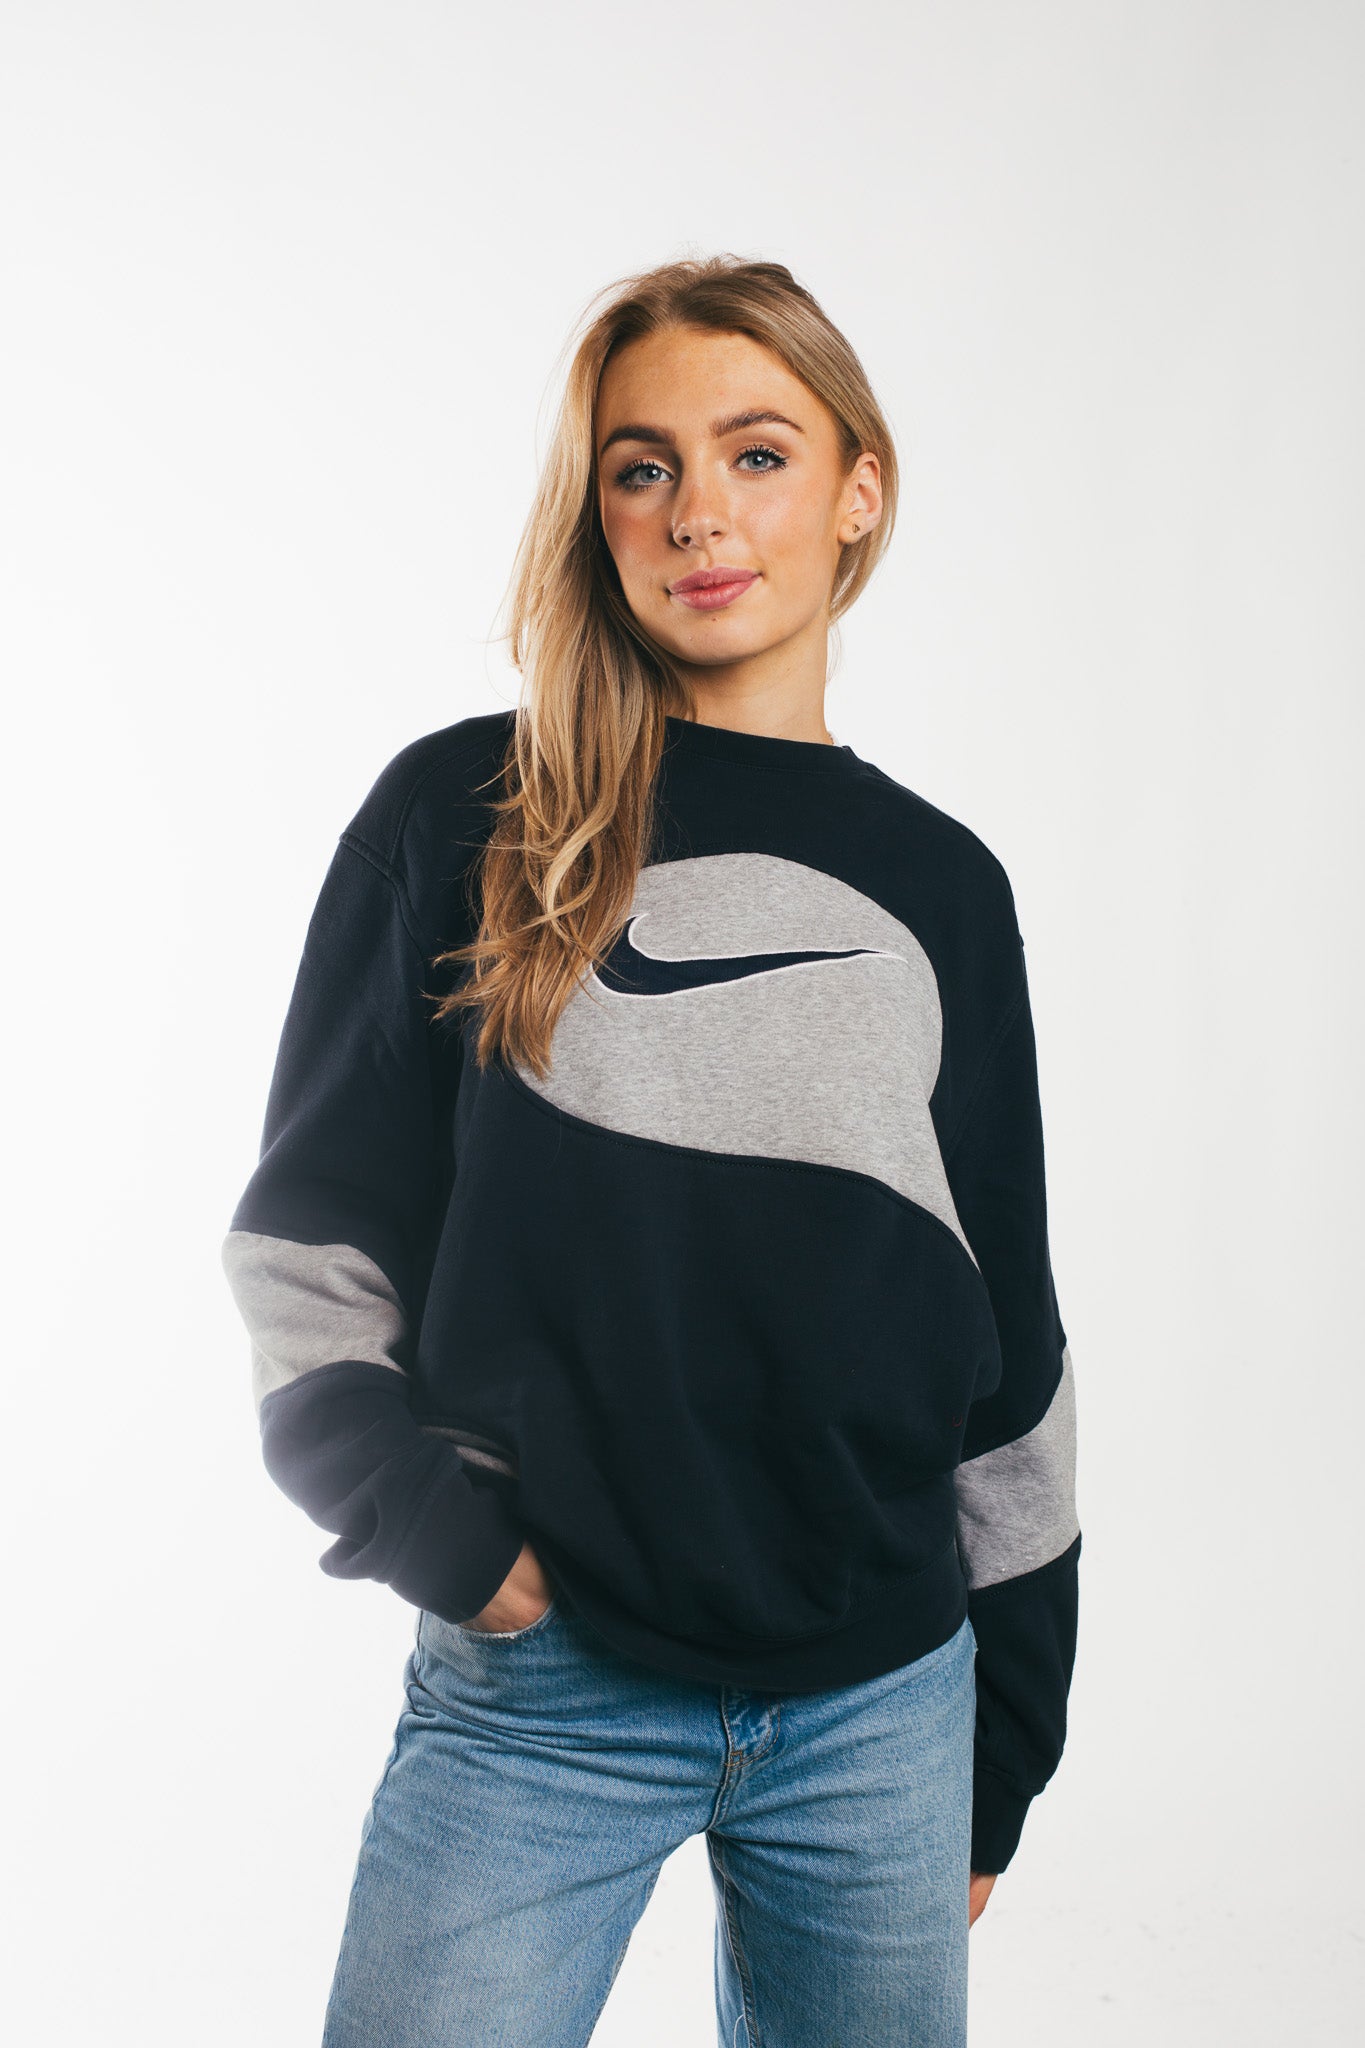 Nike - Sweatshirt (L)